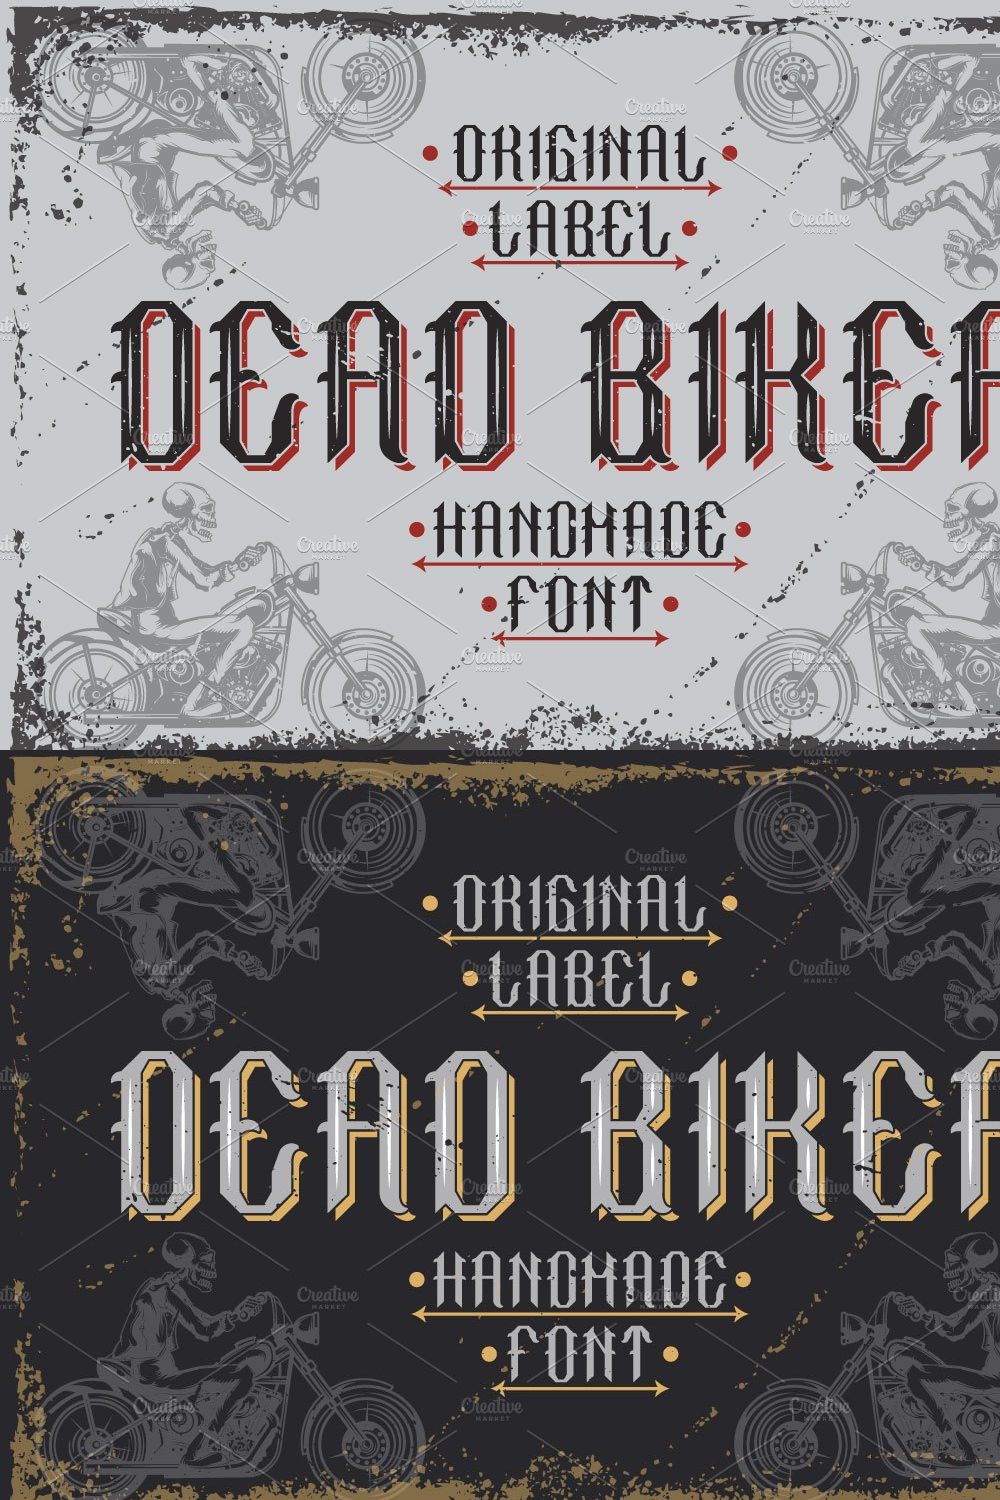 Handcrafted font "Dead biker" pinterest preview image.